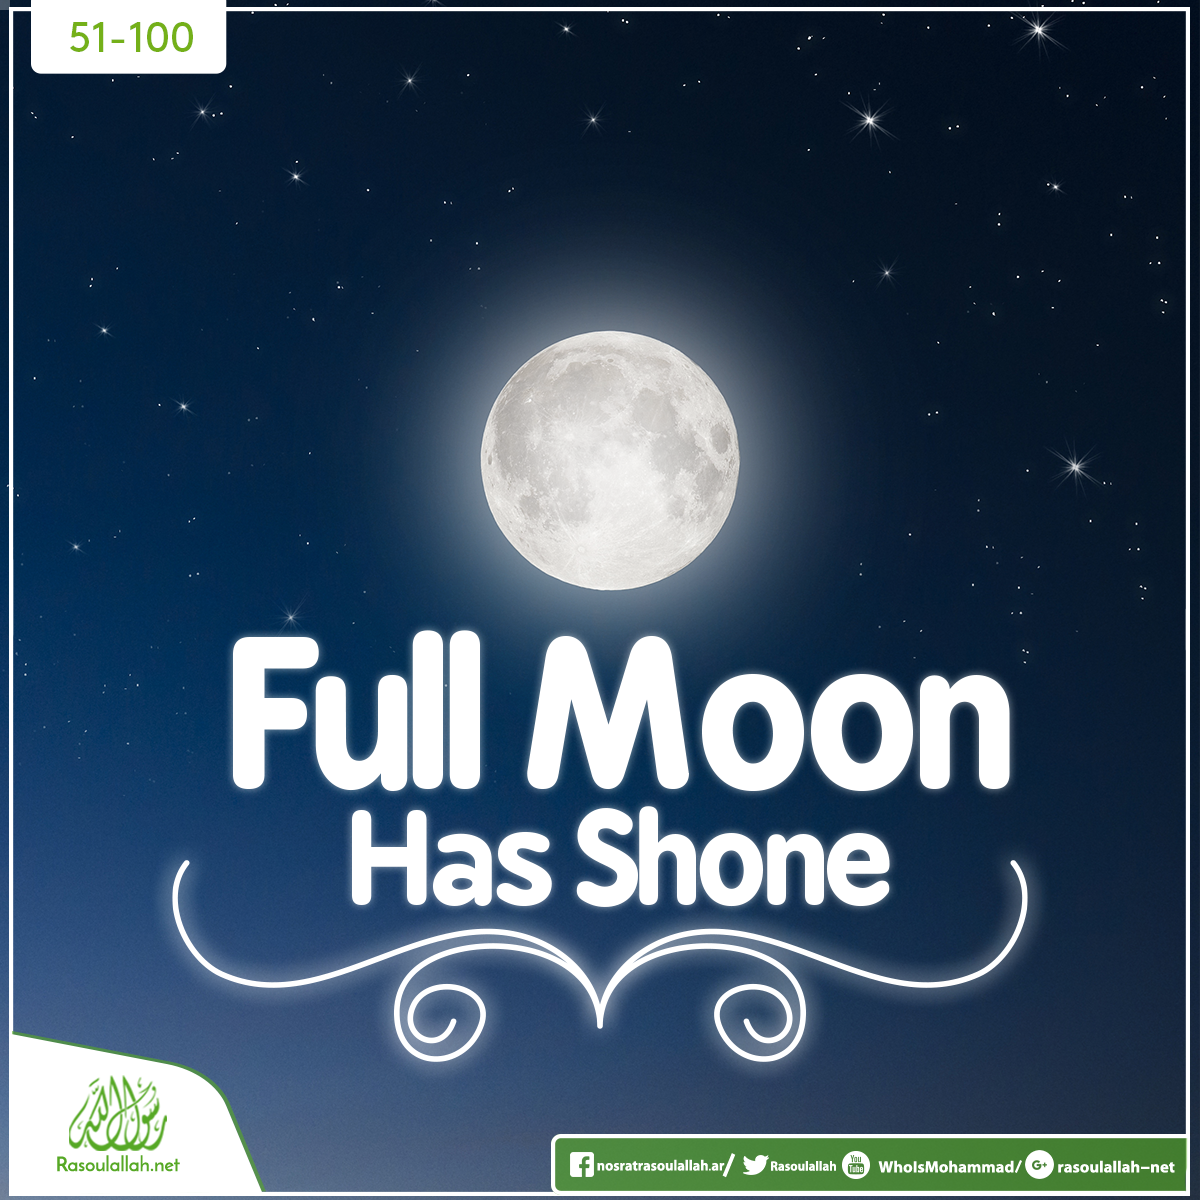   Full Moon Has Shone